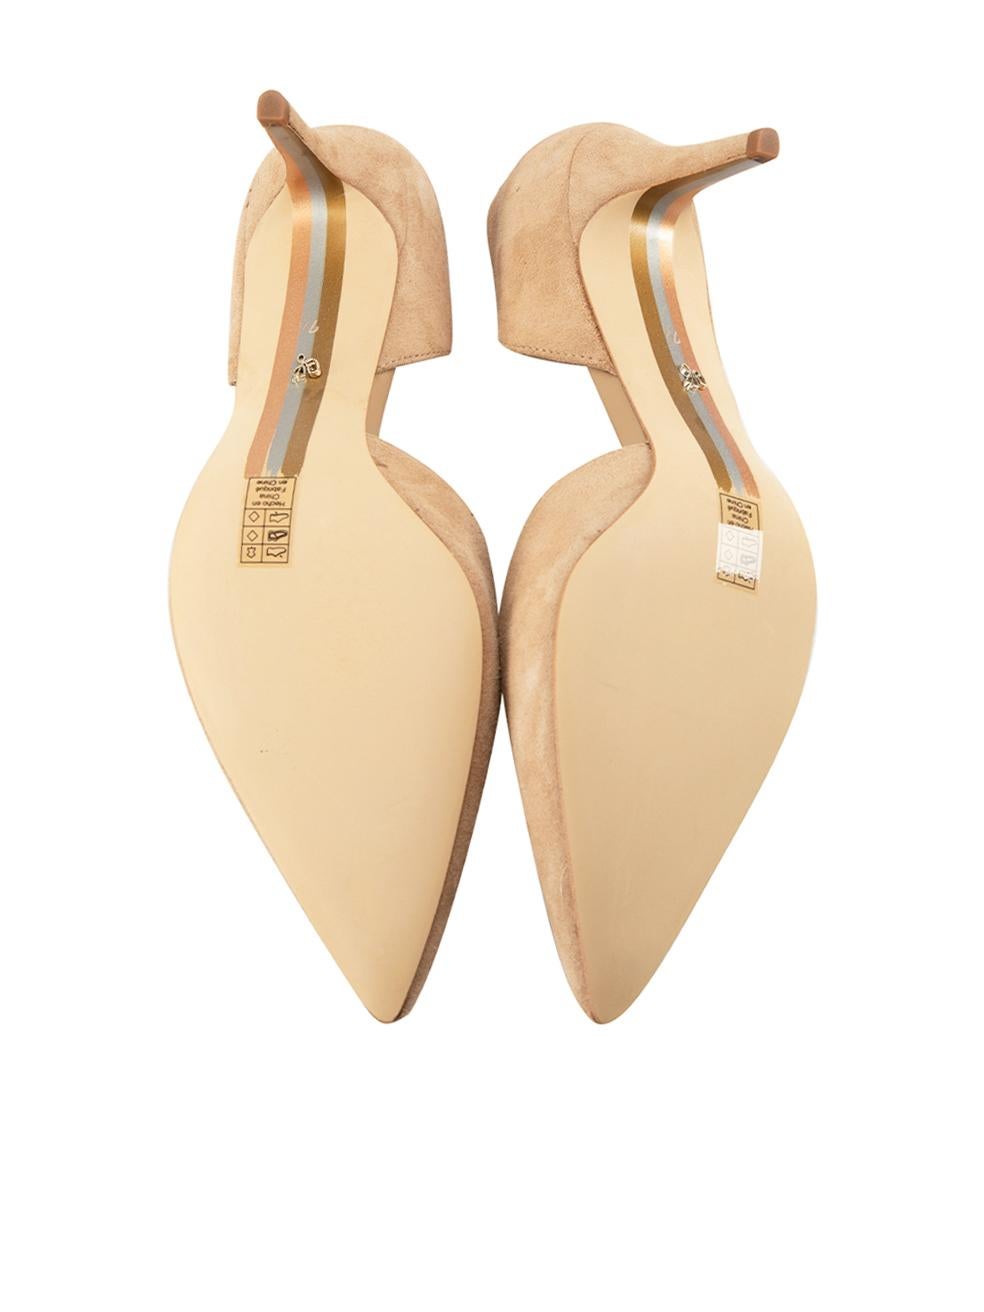 Women's Sam Edelman Beige Suede Pointed-Toe Heels Size US 7.5 For Sale